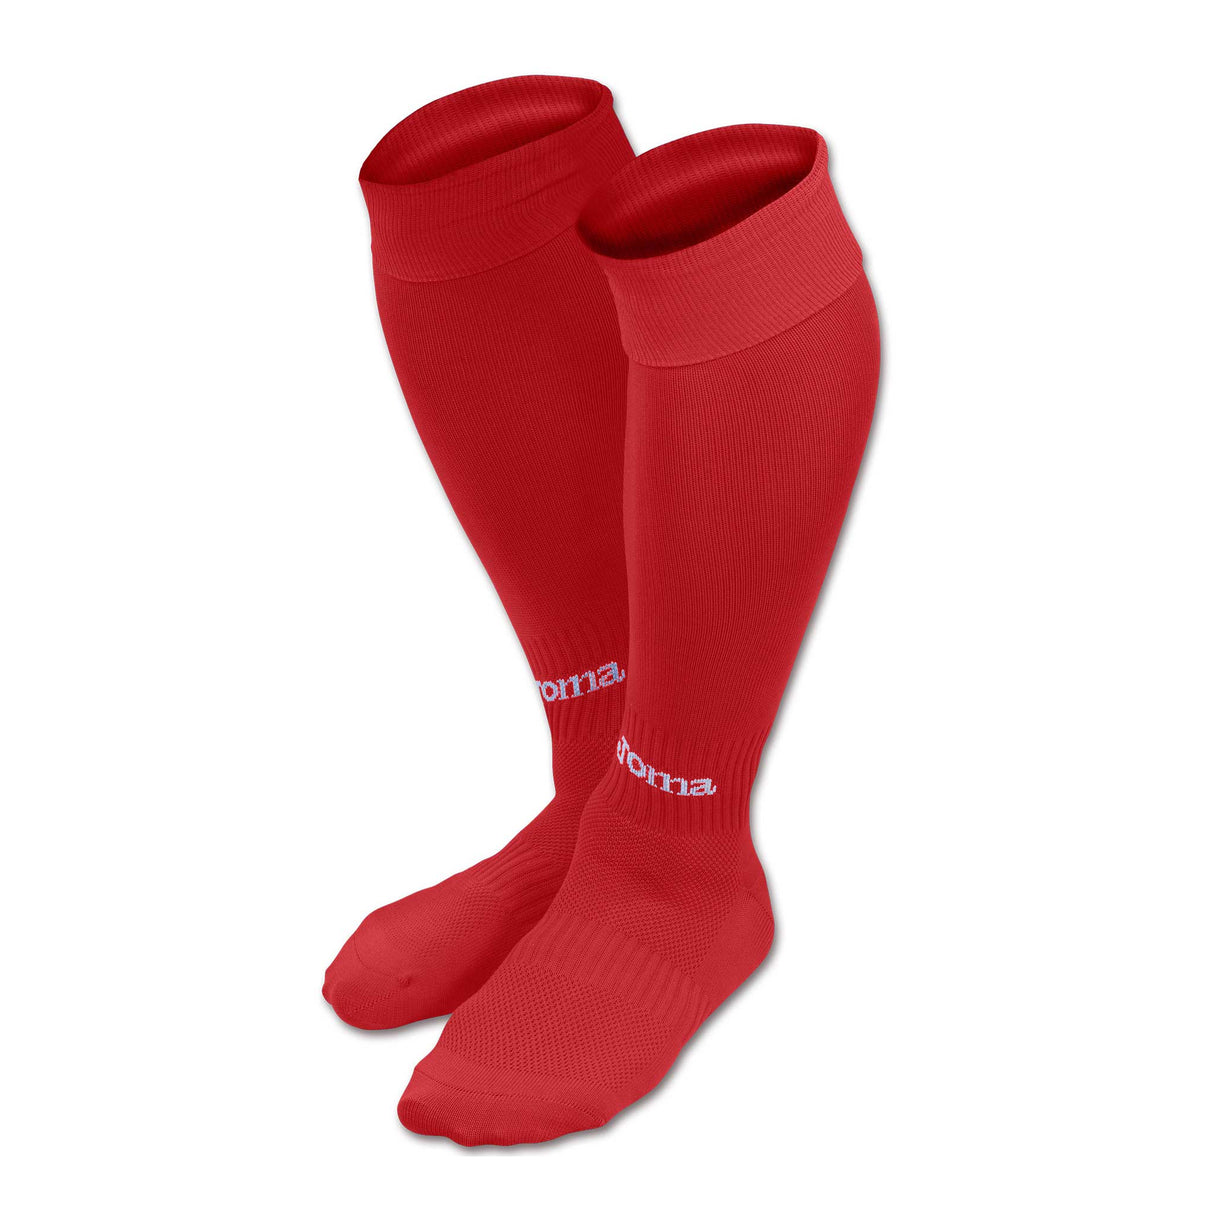 Joma Classic II Sacred Heart Elks Soccer Socks